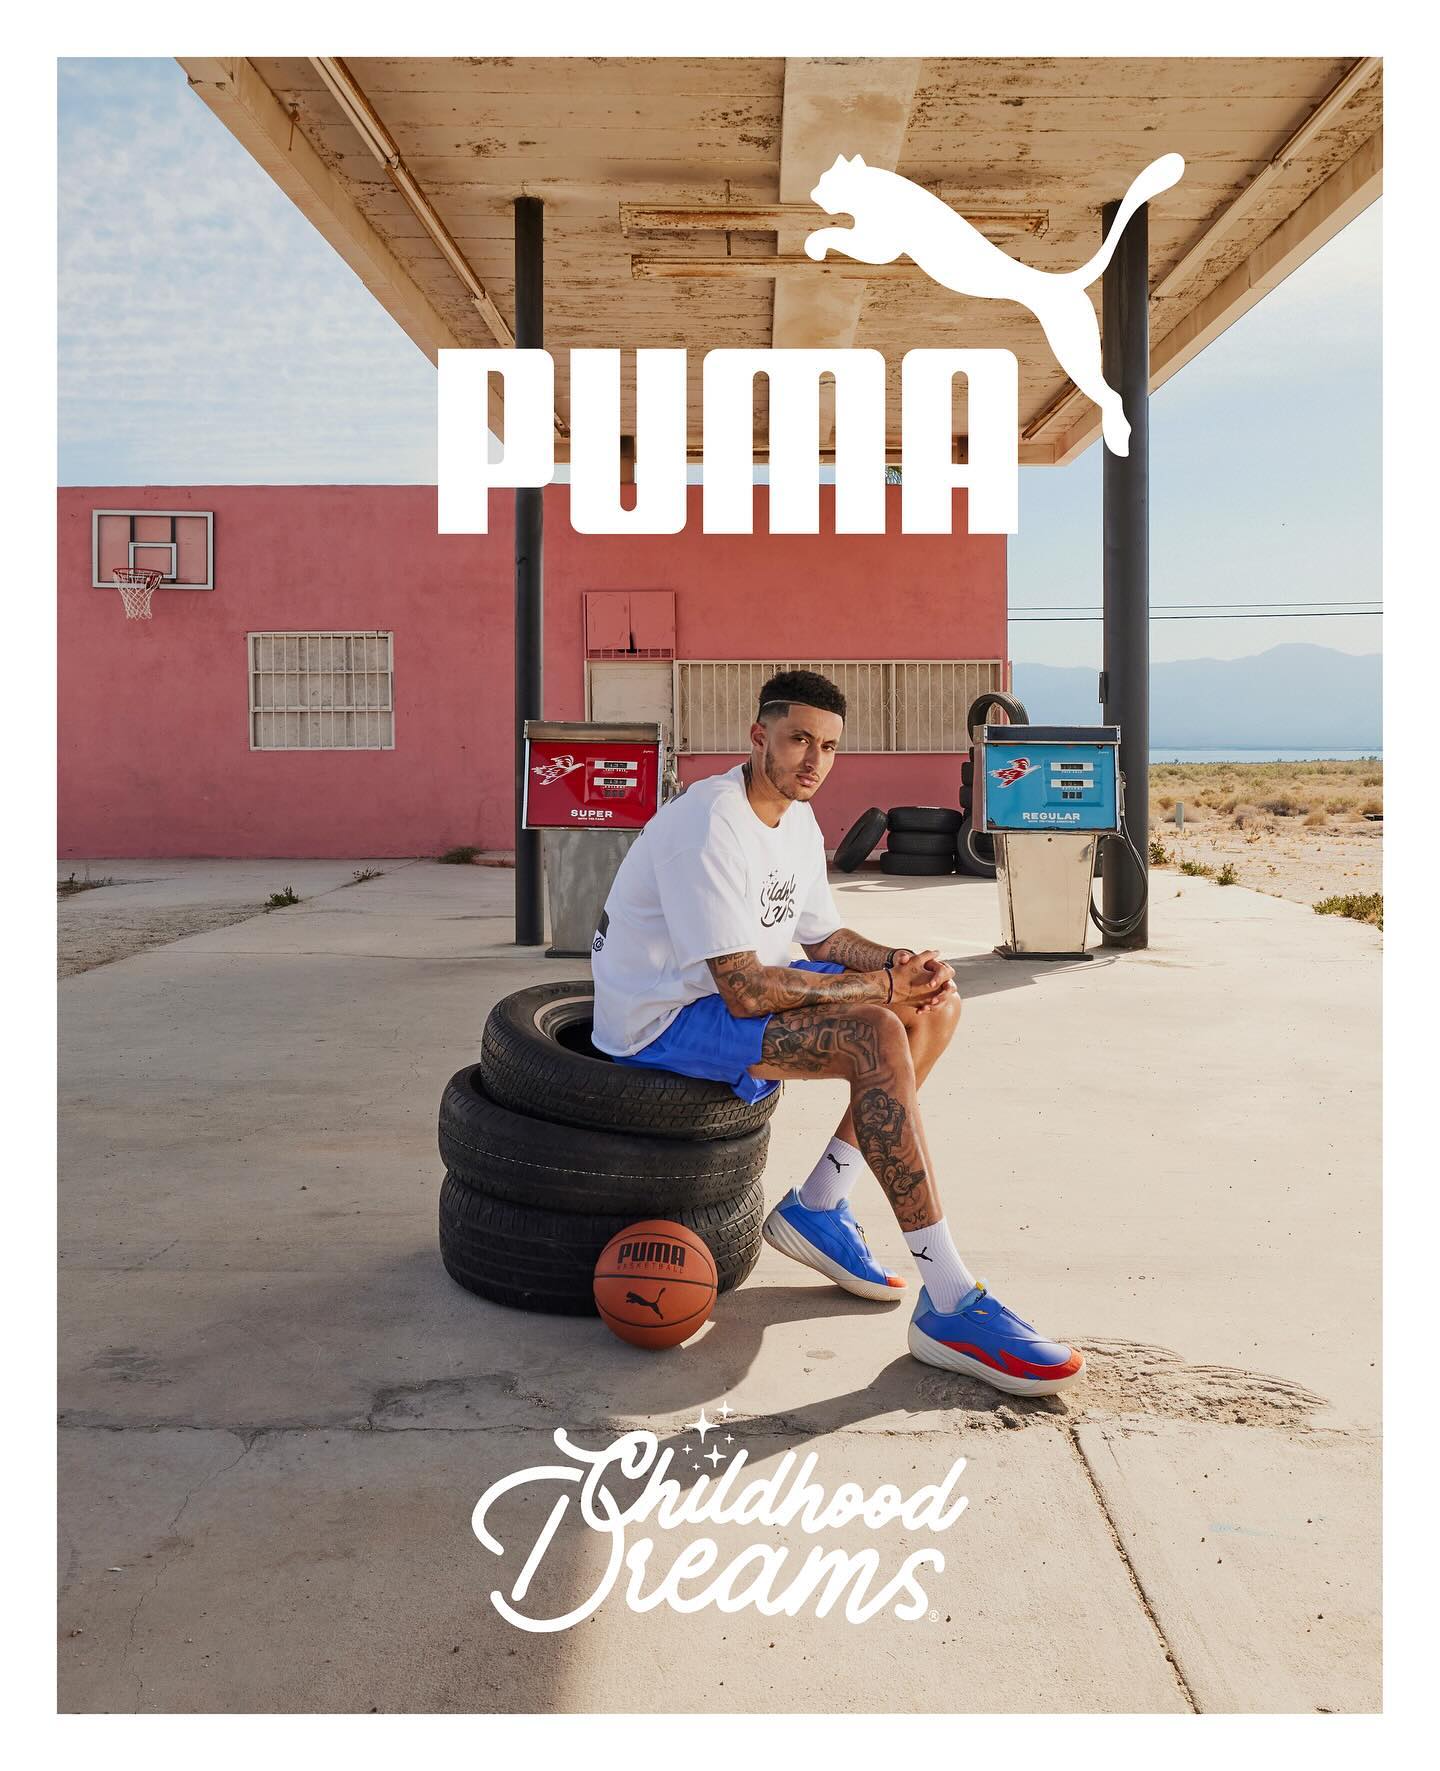 Kyle Kuzma @kuz for Puma X Childhood Dreams new collection.
-
Thank you to everyone involved:
@pumahoops @kuz
AD: Jenny 